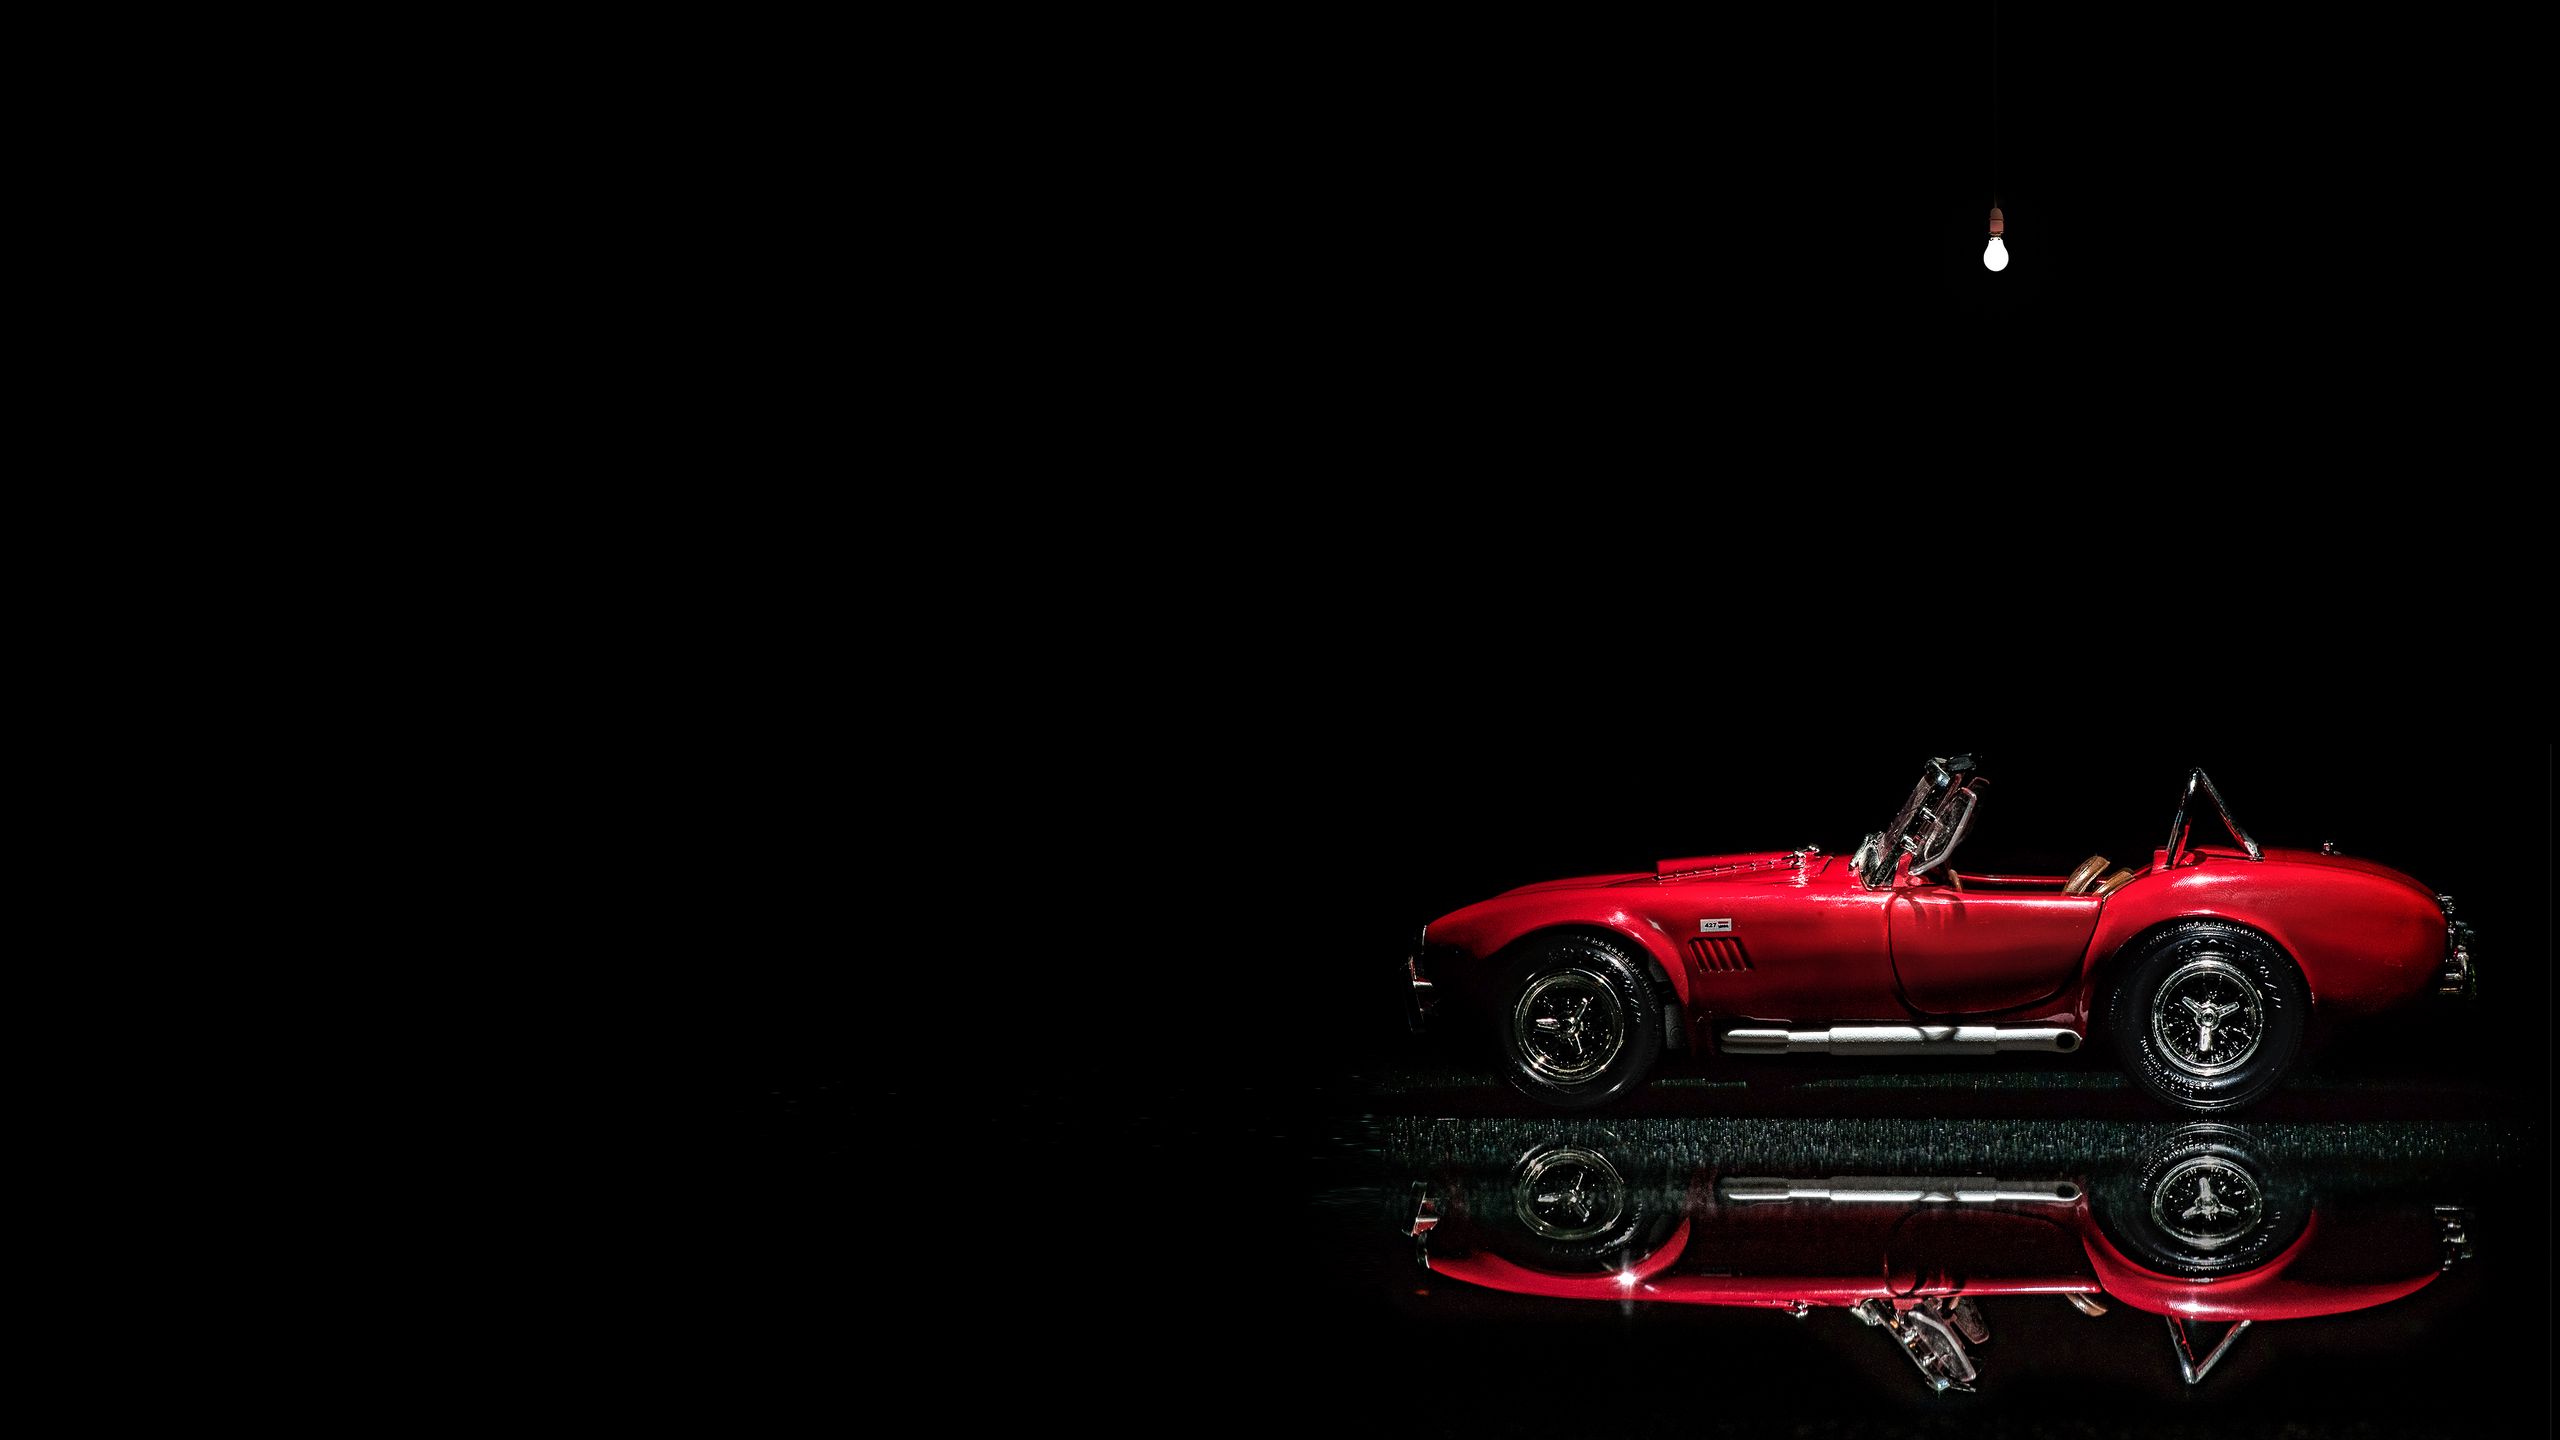 Download wallpaper 2560x1440 car, red, retro, toy, reflection, dark